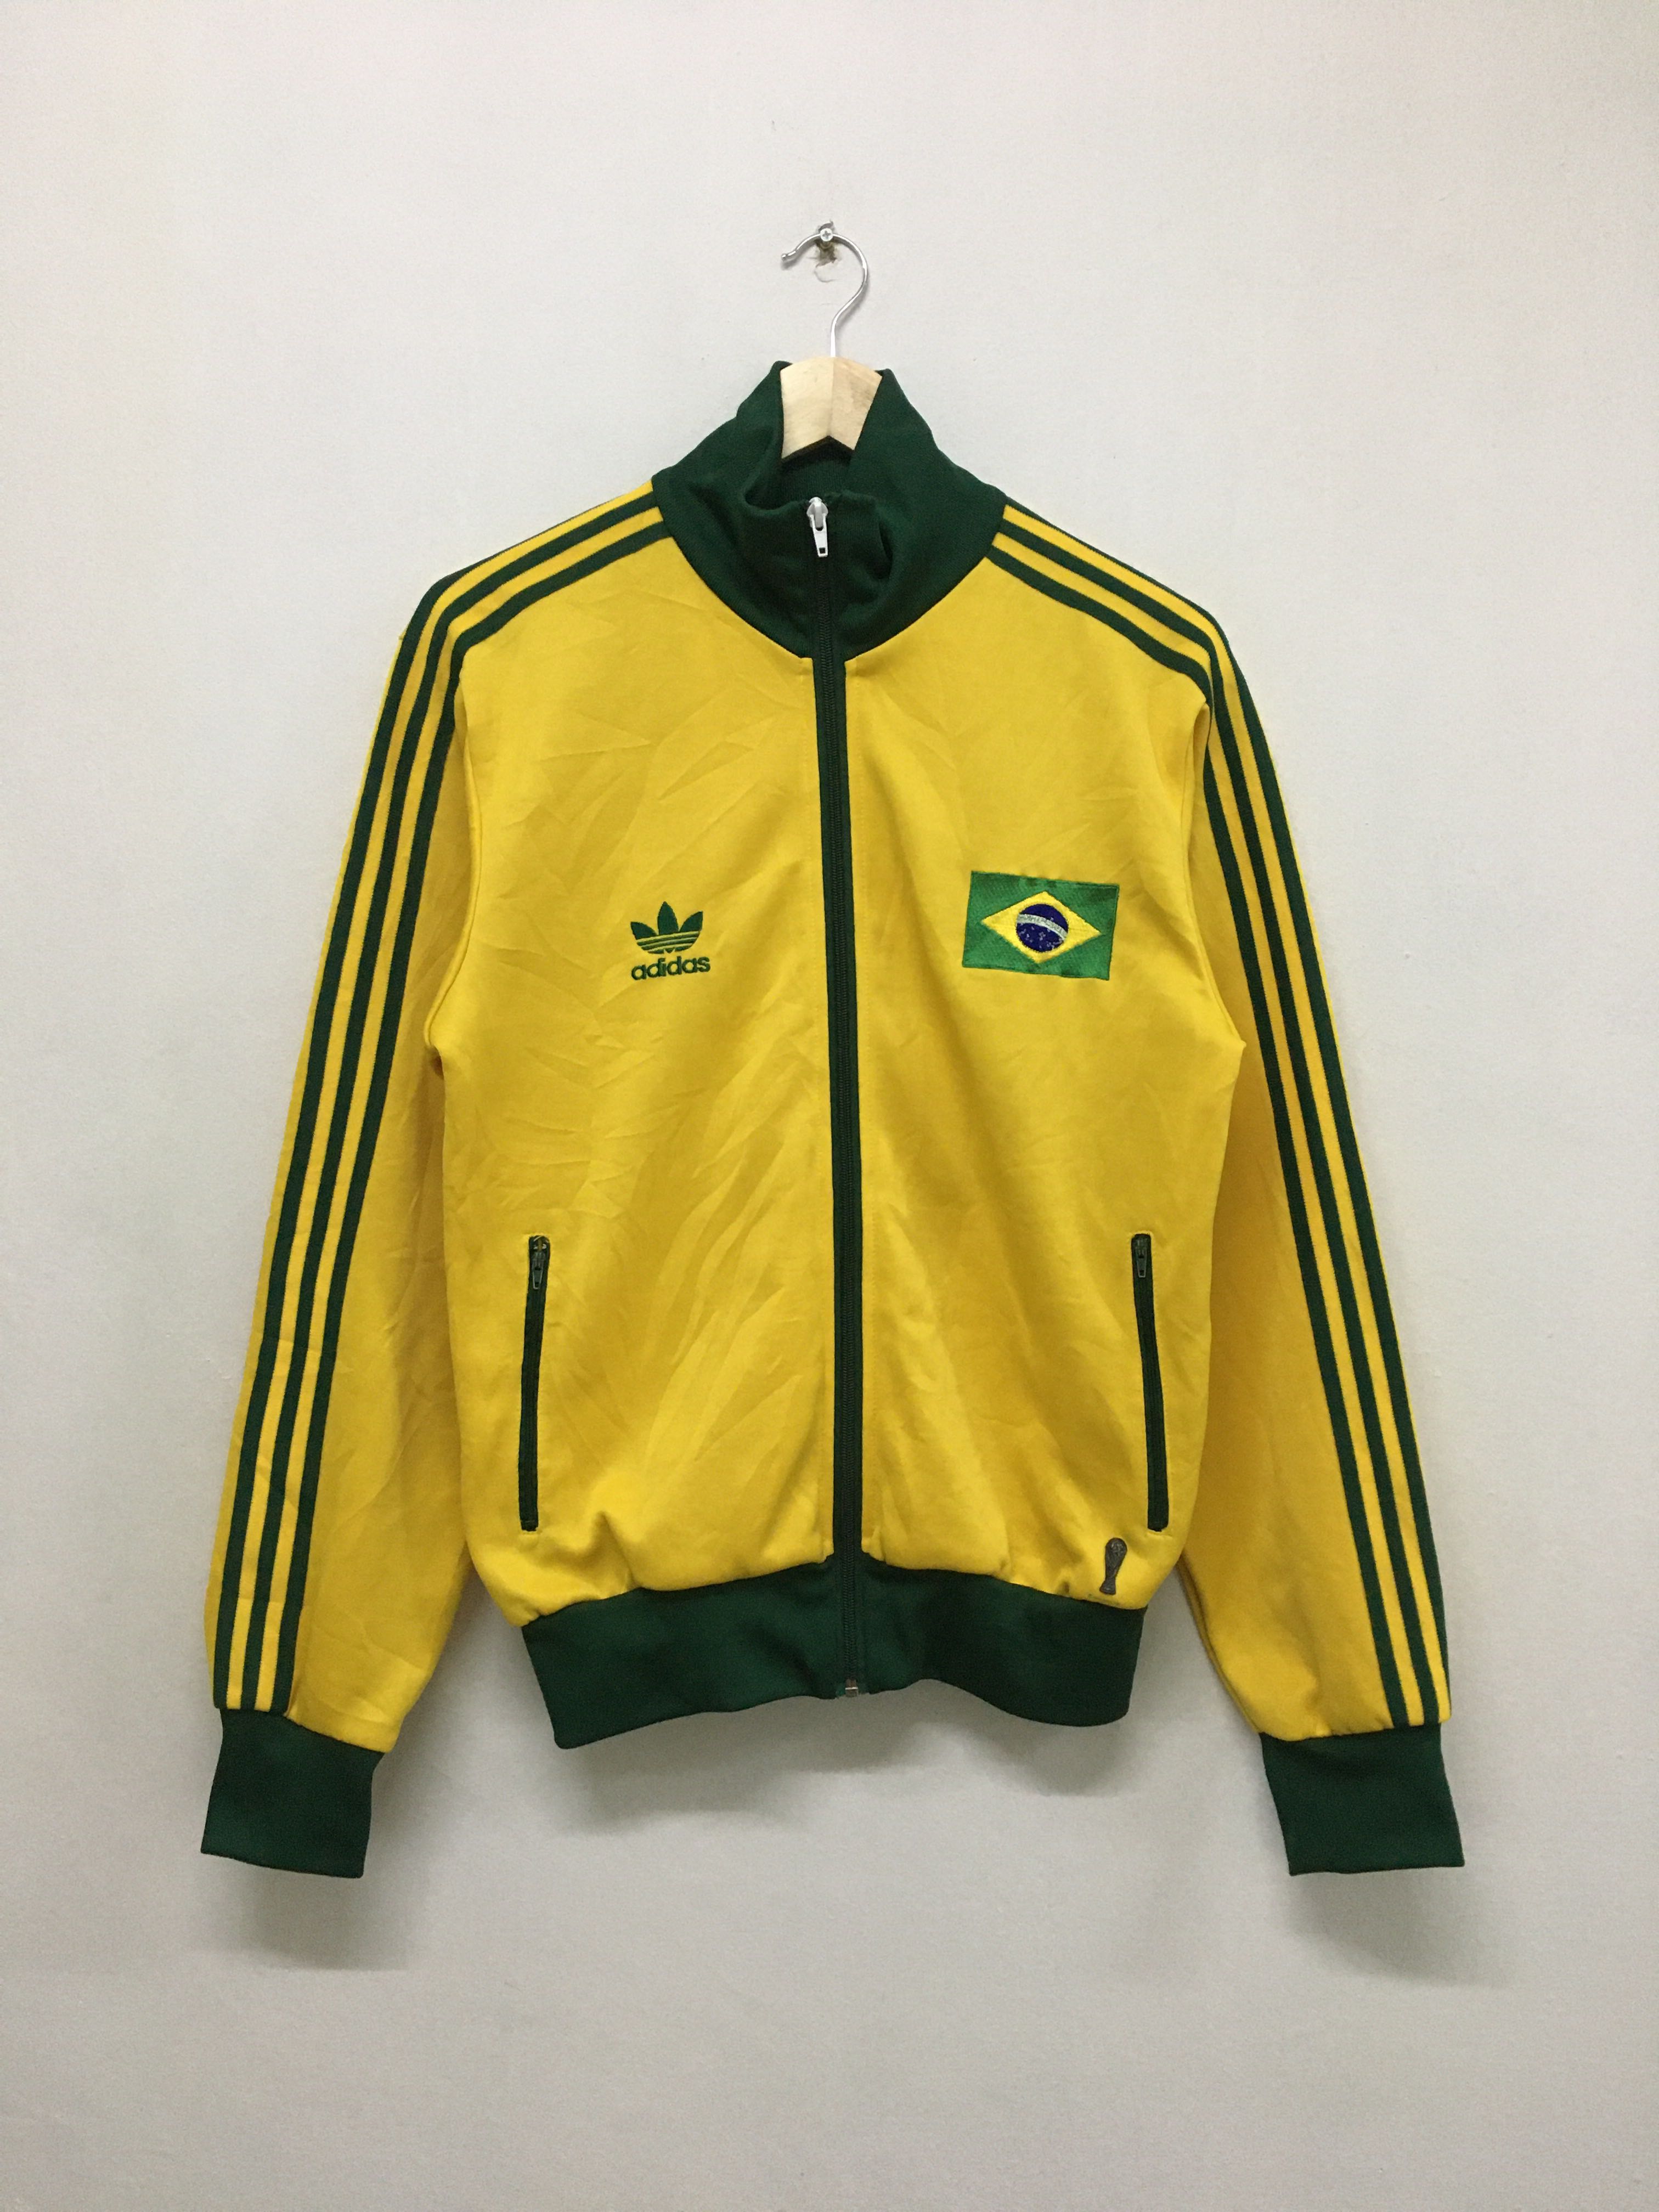 https://media.karousell.com/media/photos/products/2021/10/15/adidas_brazil_tracktop_jacket_1634314157_d5898b81.jpg